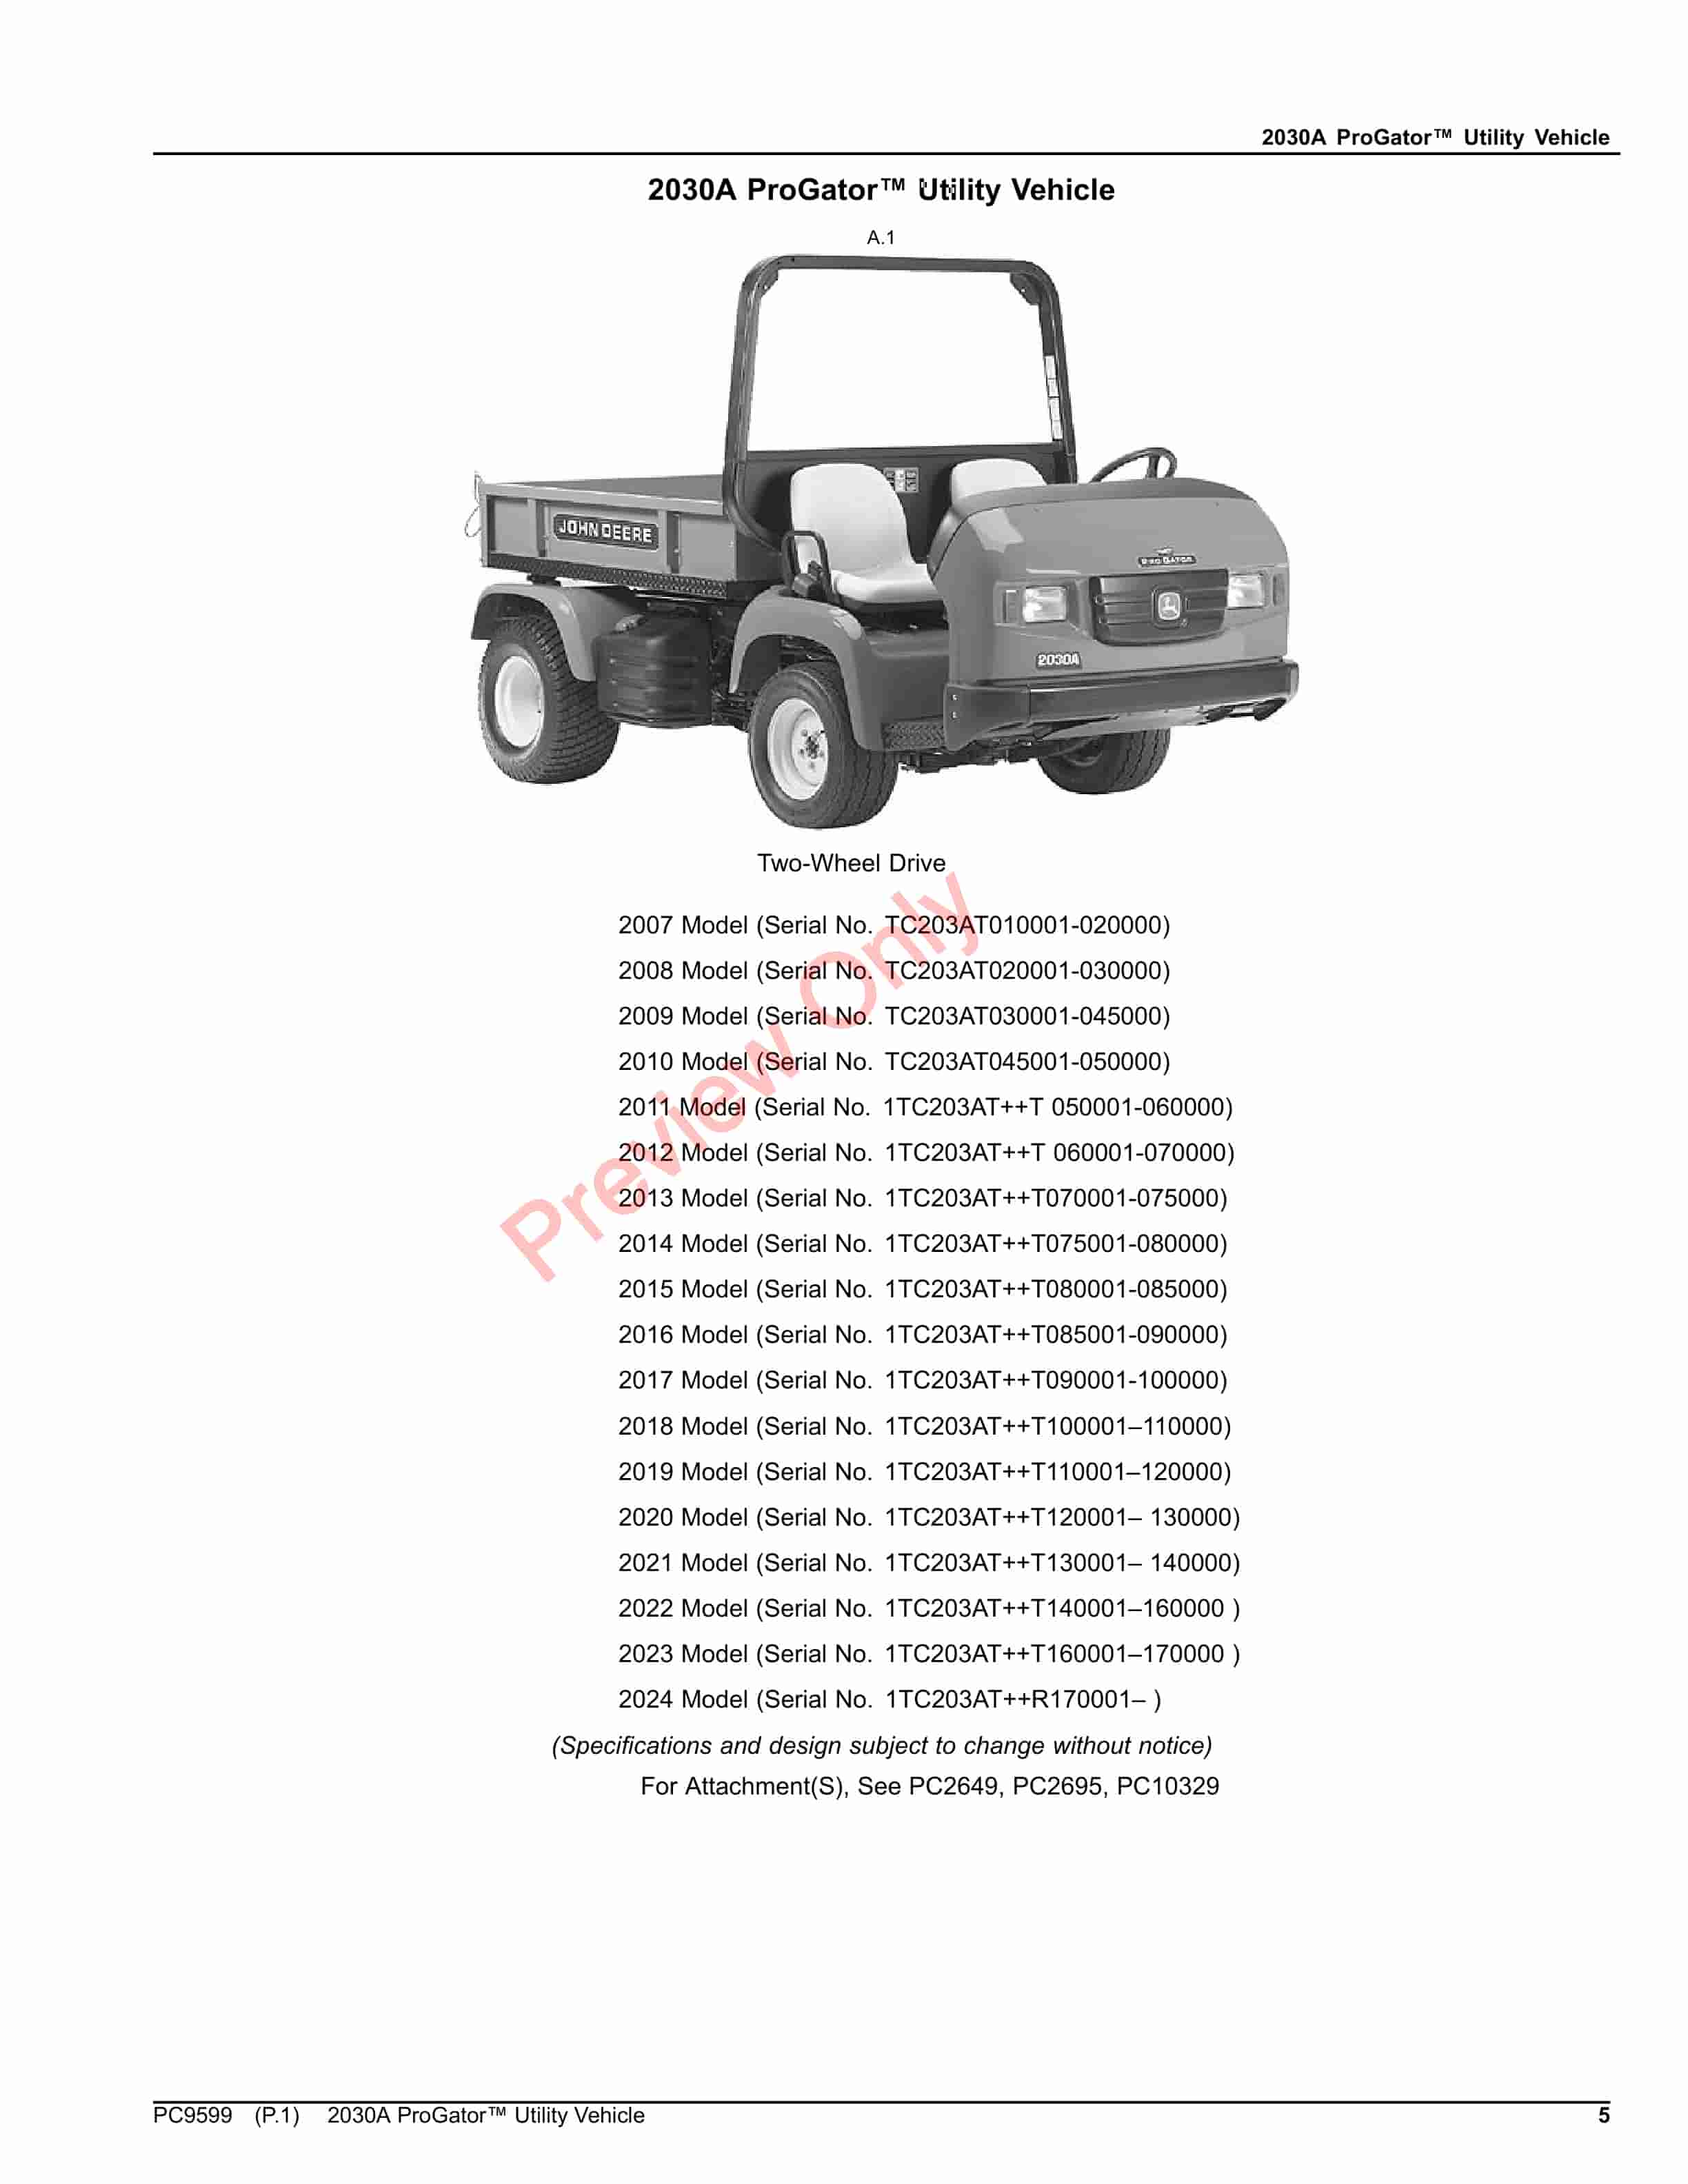 John Deere 2030A ProGator Utility Vehicle Parts Catalog PC9599 09NOV23-5